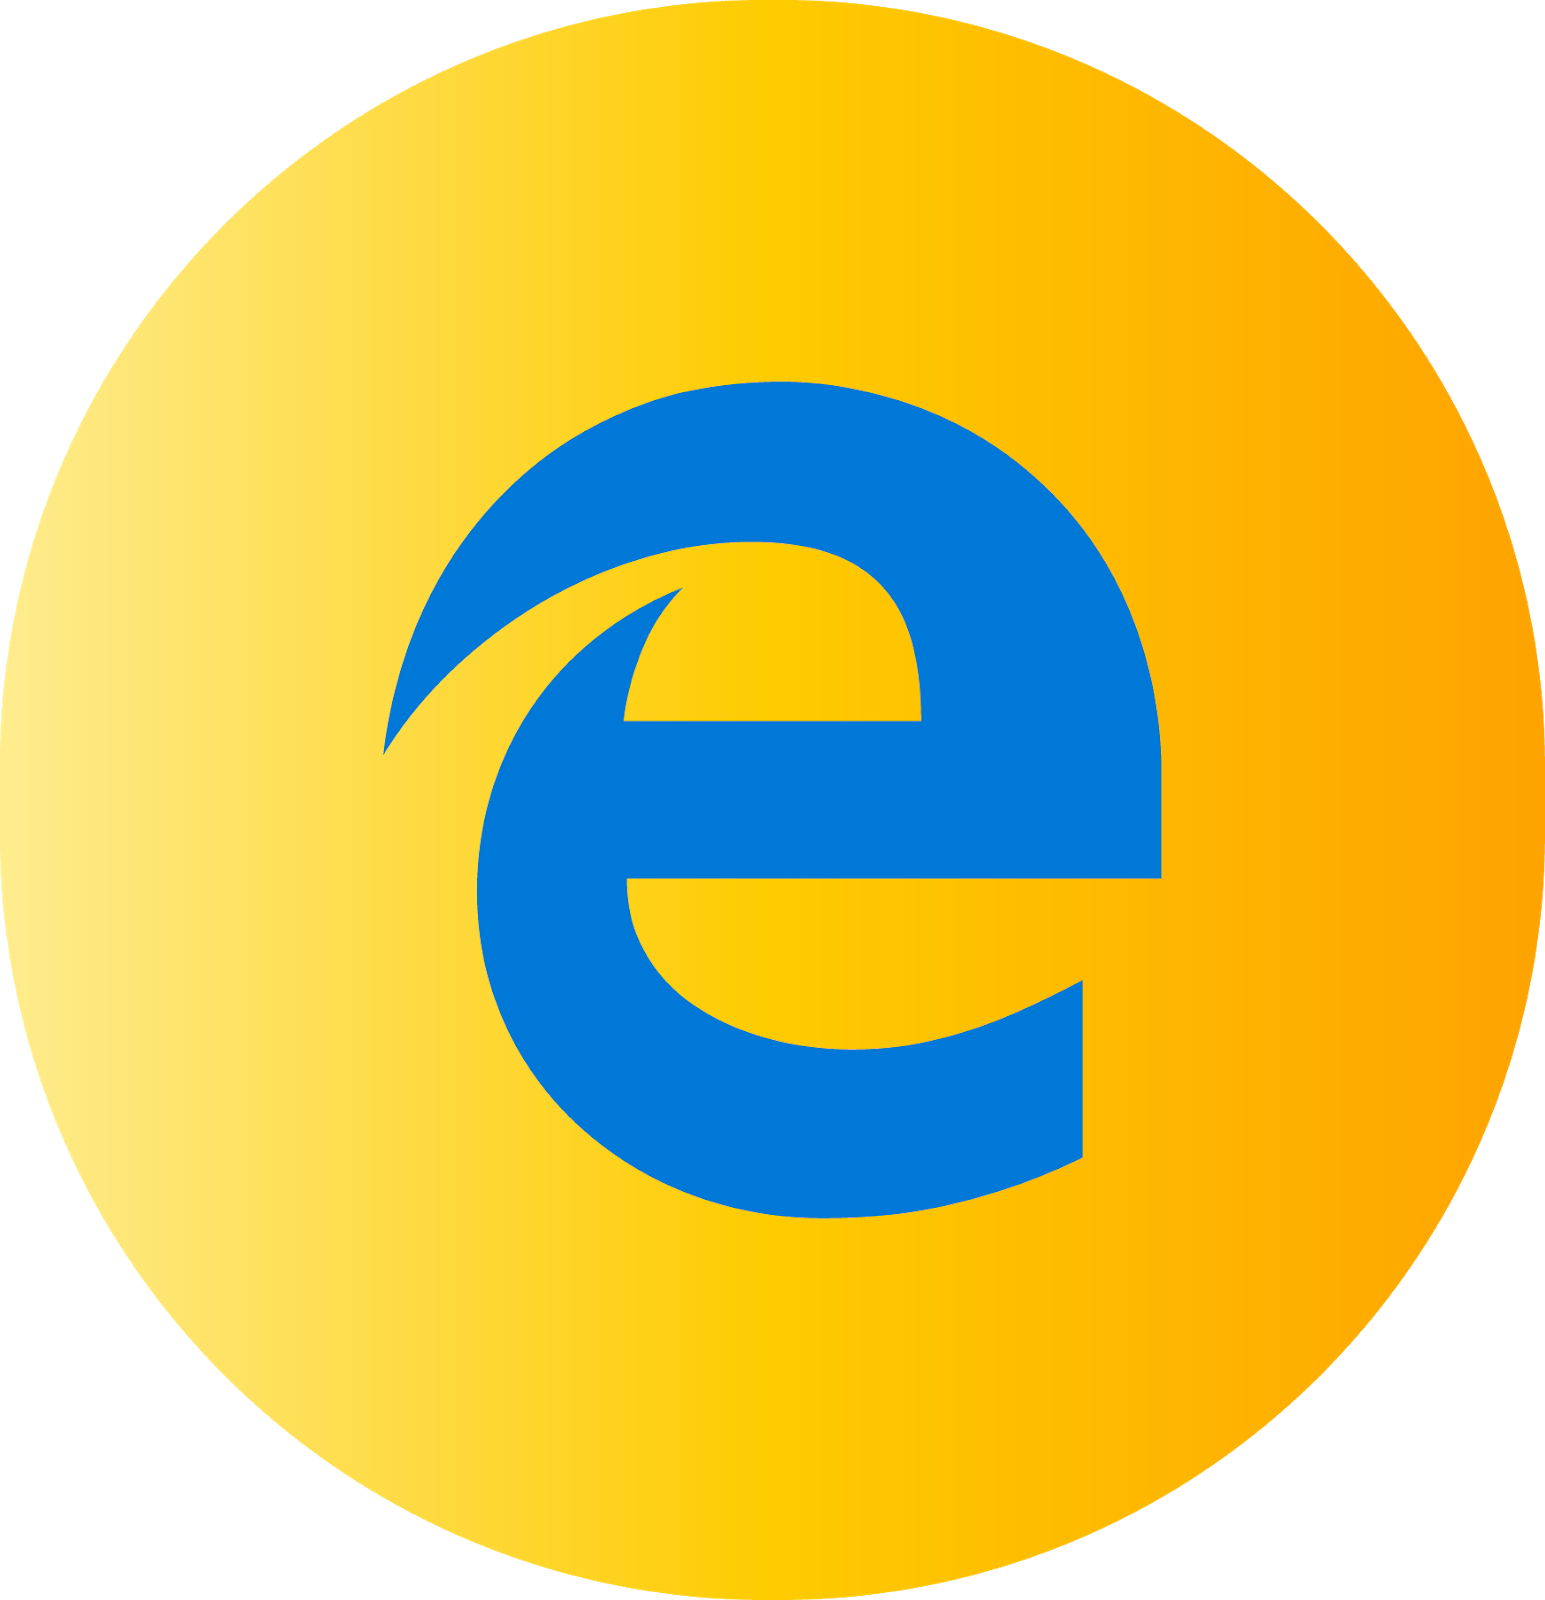 Microsoft Edge Icon at Vectorified.com | Collection of Microsoft Edge